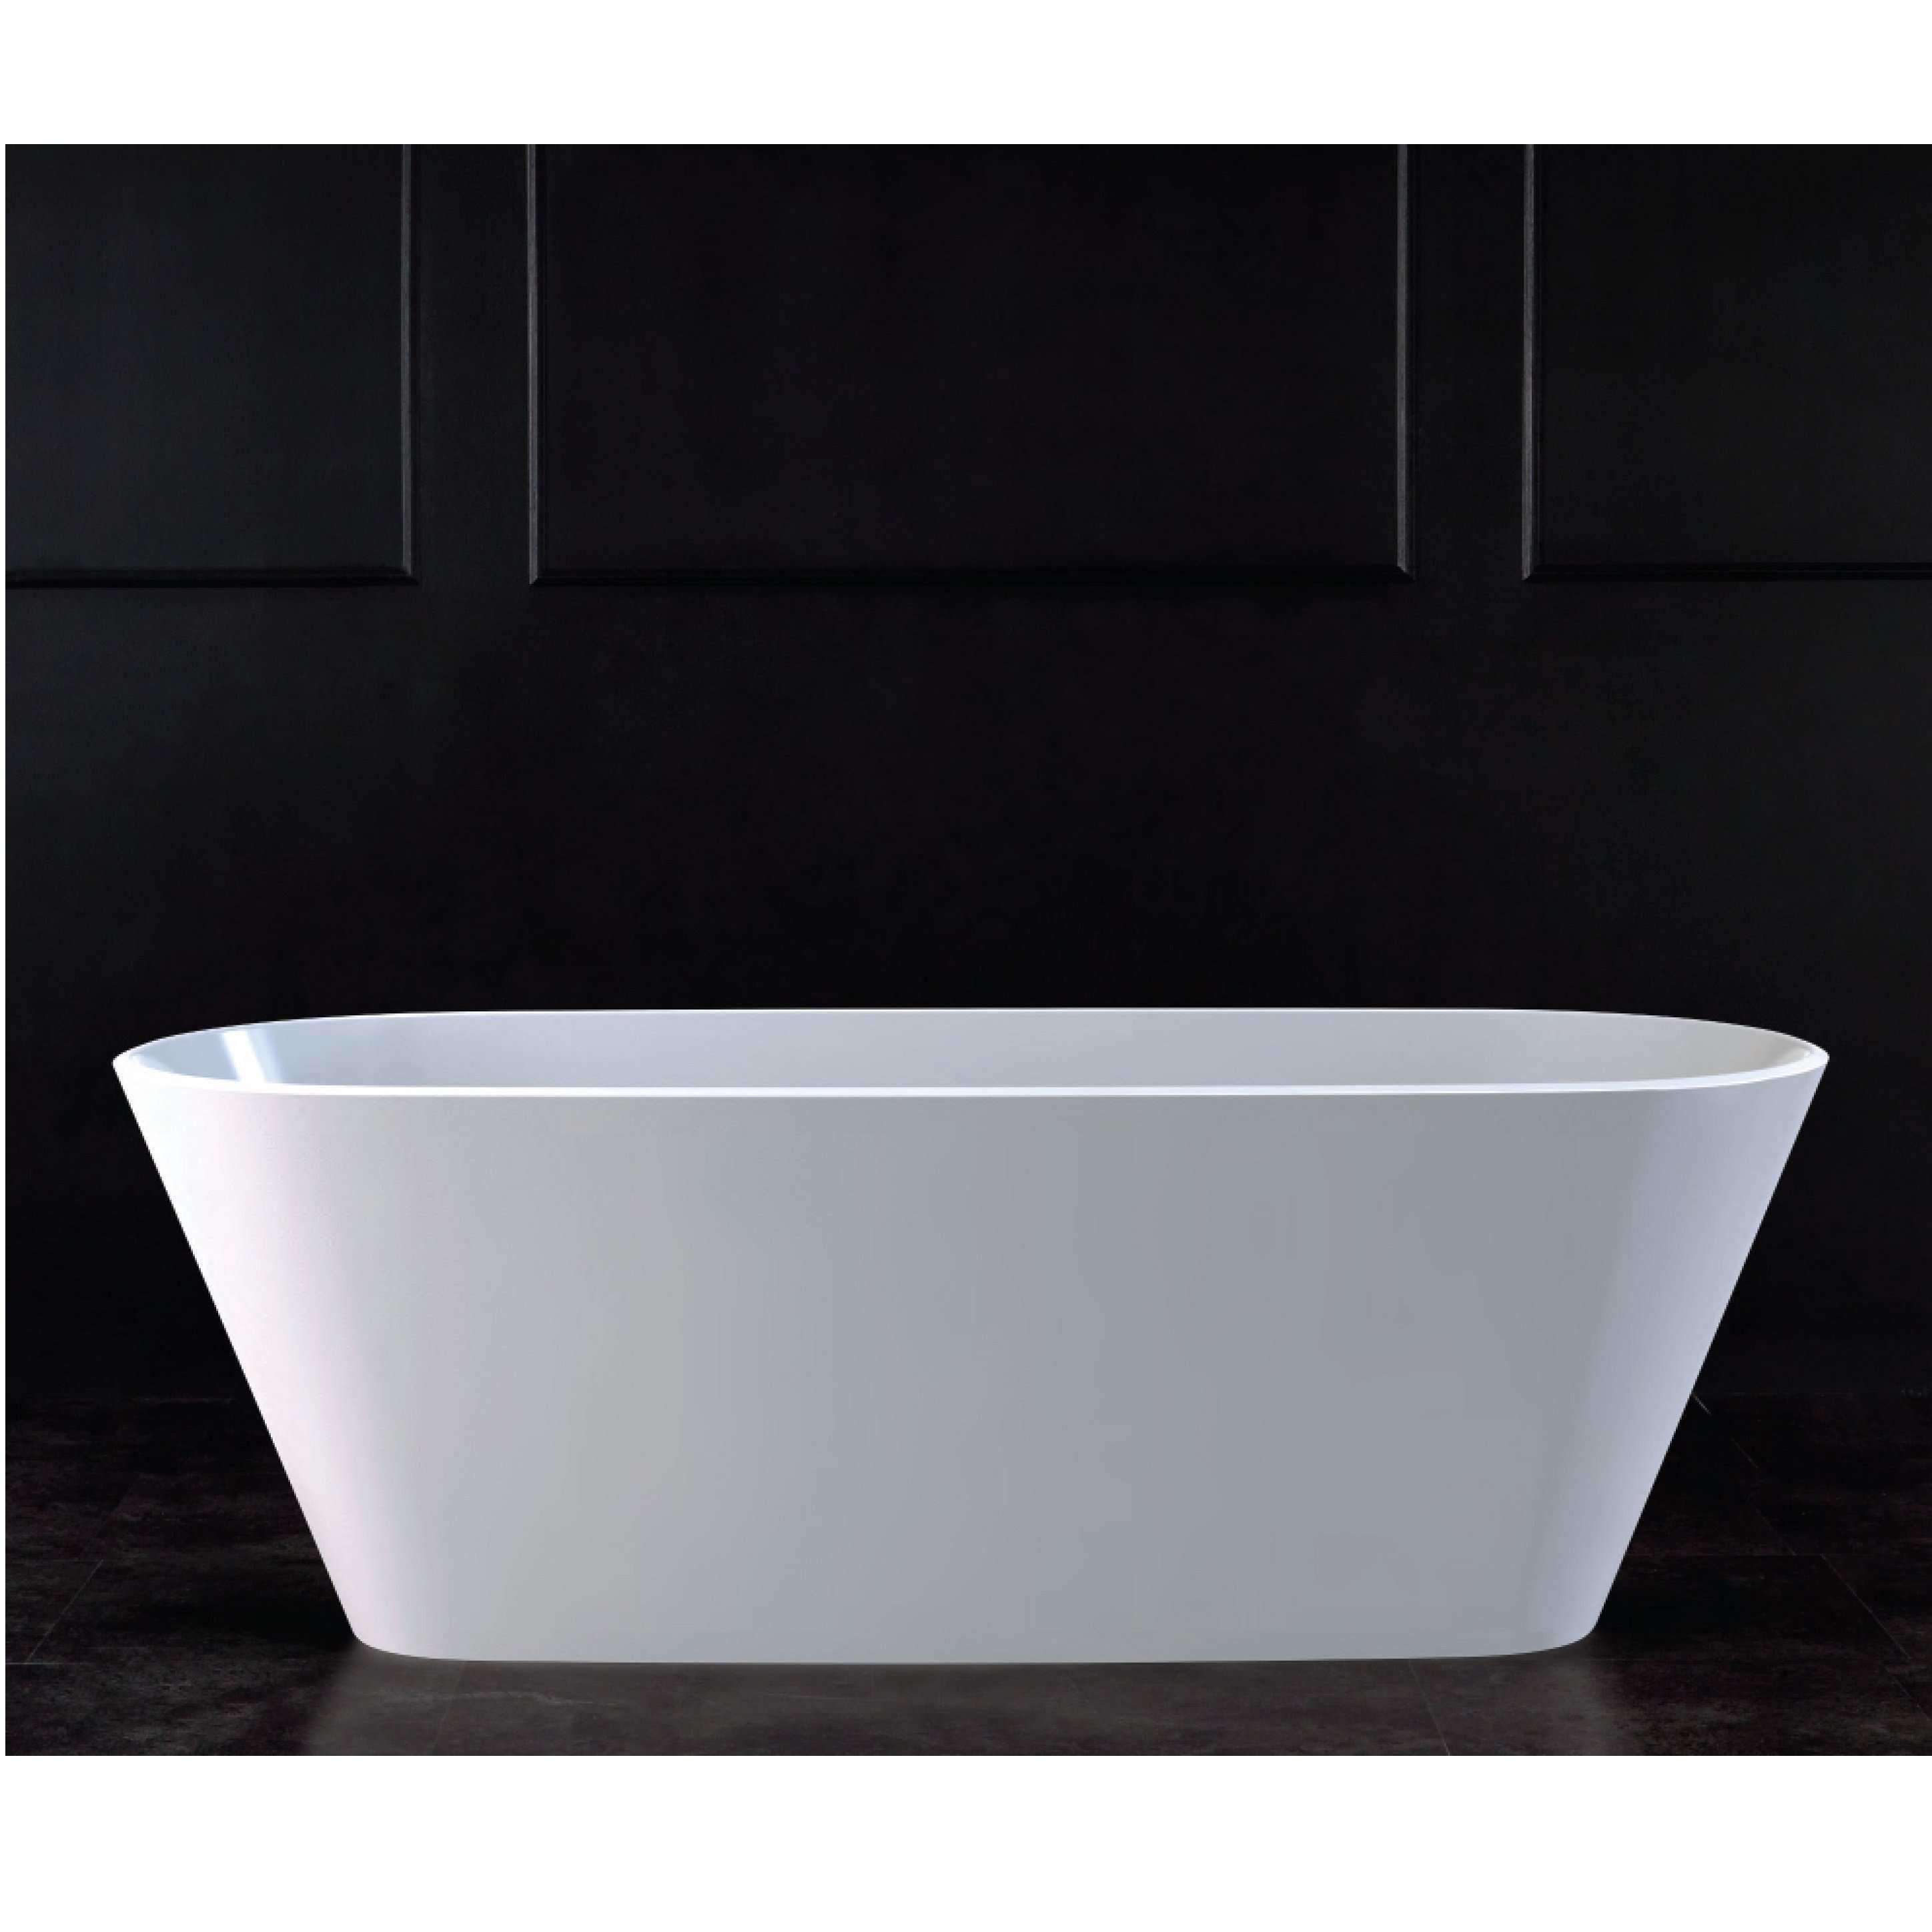 V+A Vetralla 2 Freestanding Bath No Overflow Quarrycast White - Burdens Plumbing